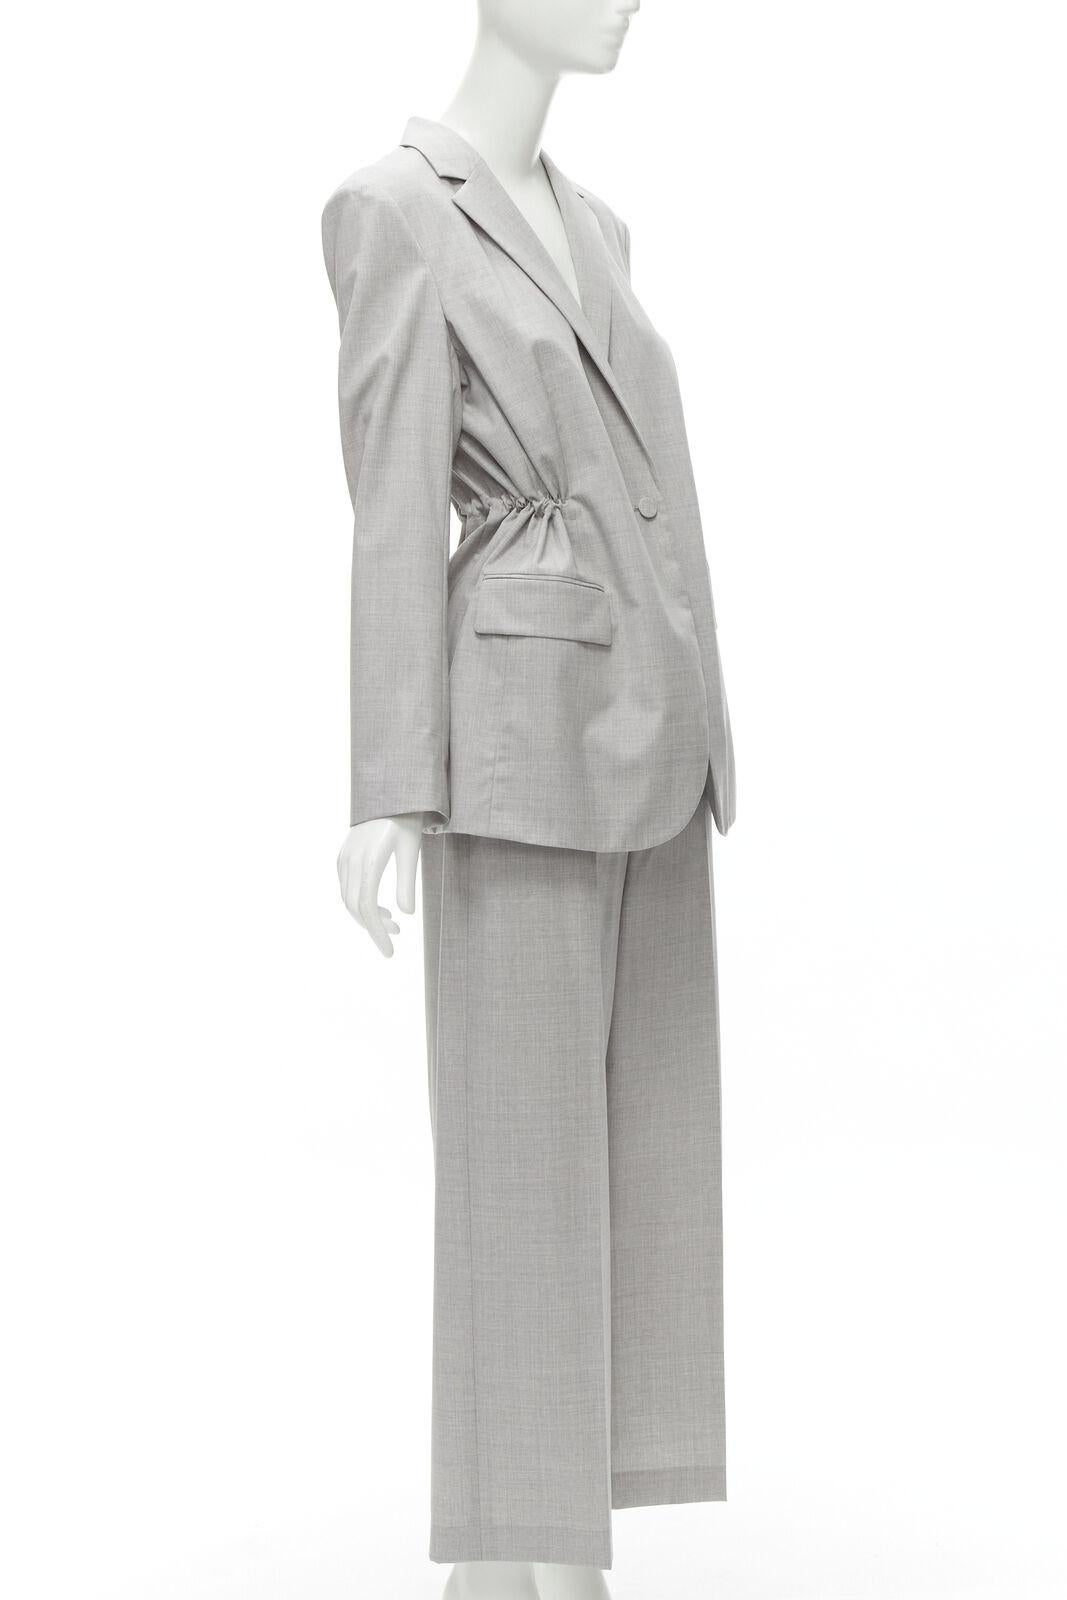 THEORY Drape wool grey drawstring cinched waist blazer wide leg pants set US6 S Excellent état - En vente à Hong Kong, NT